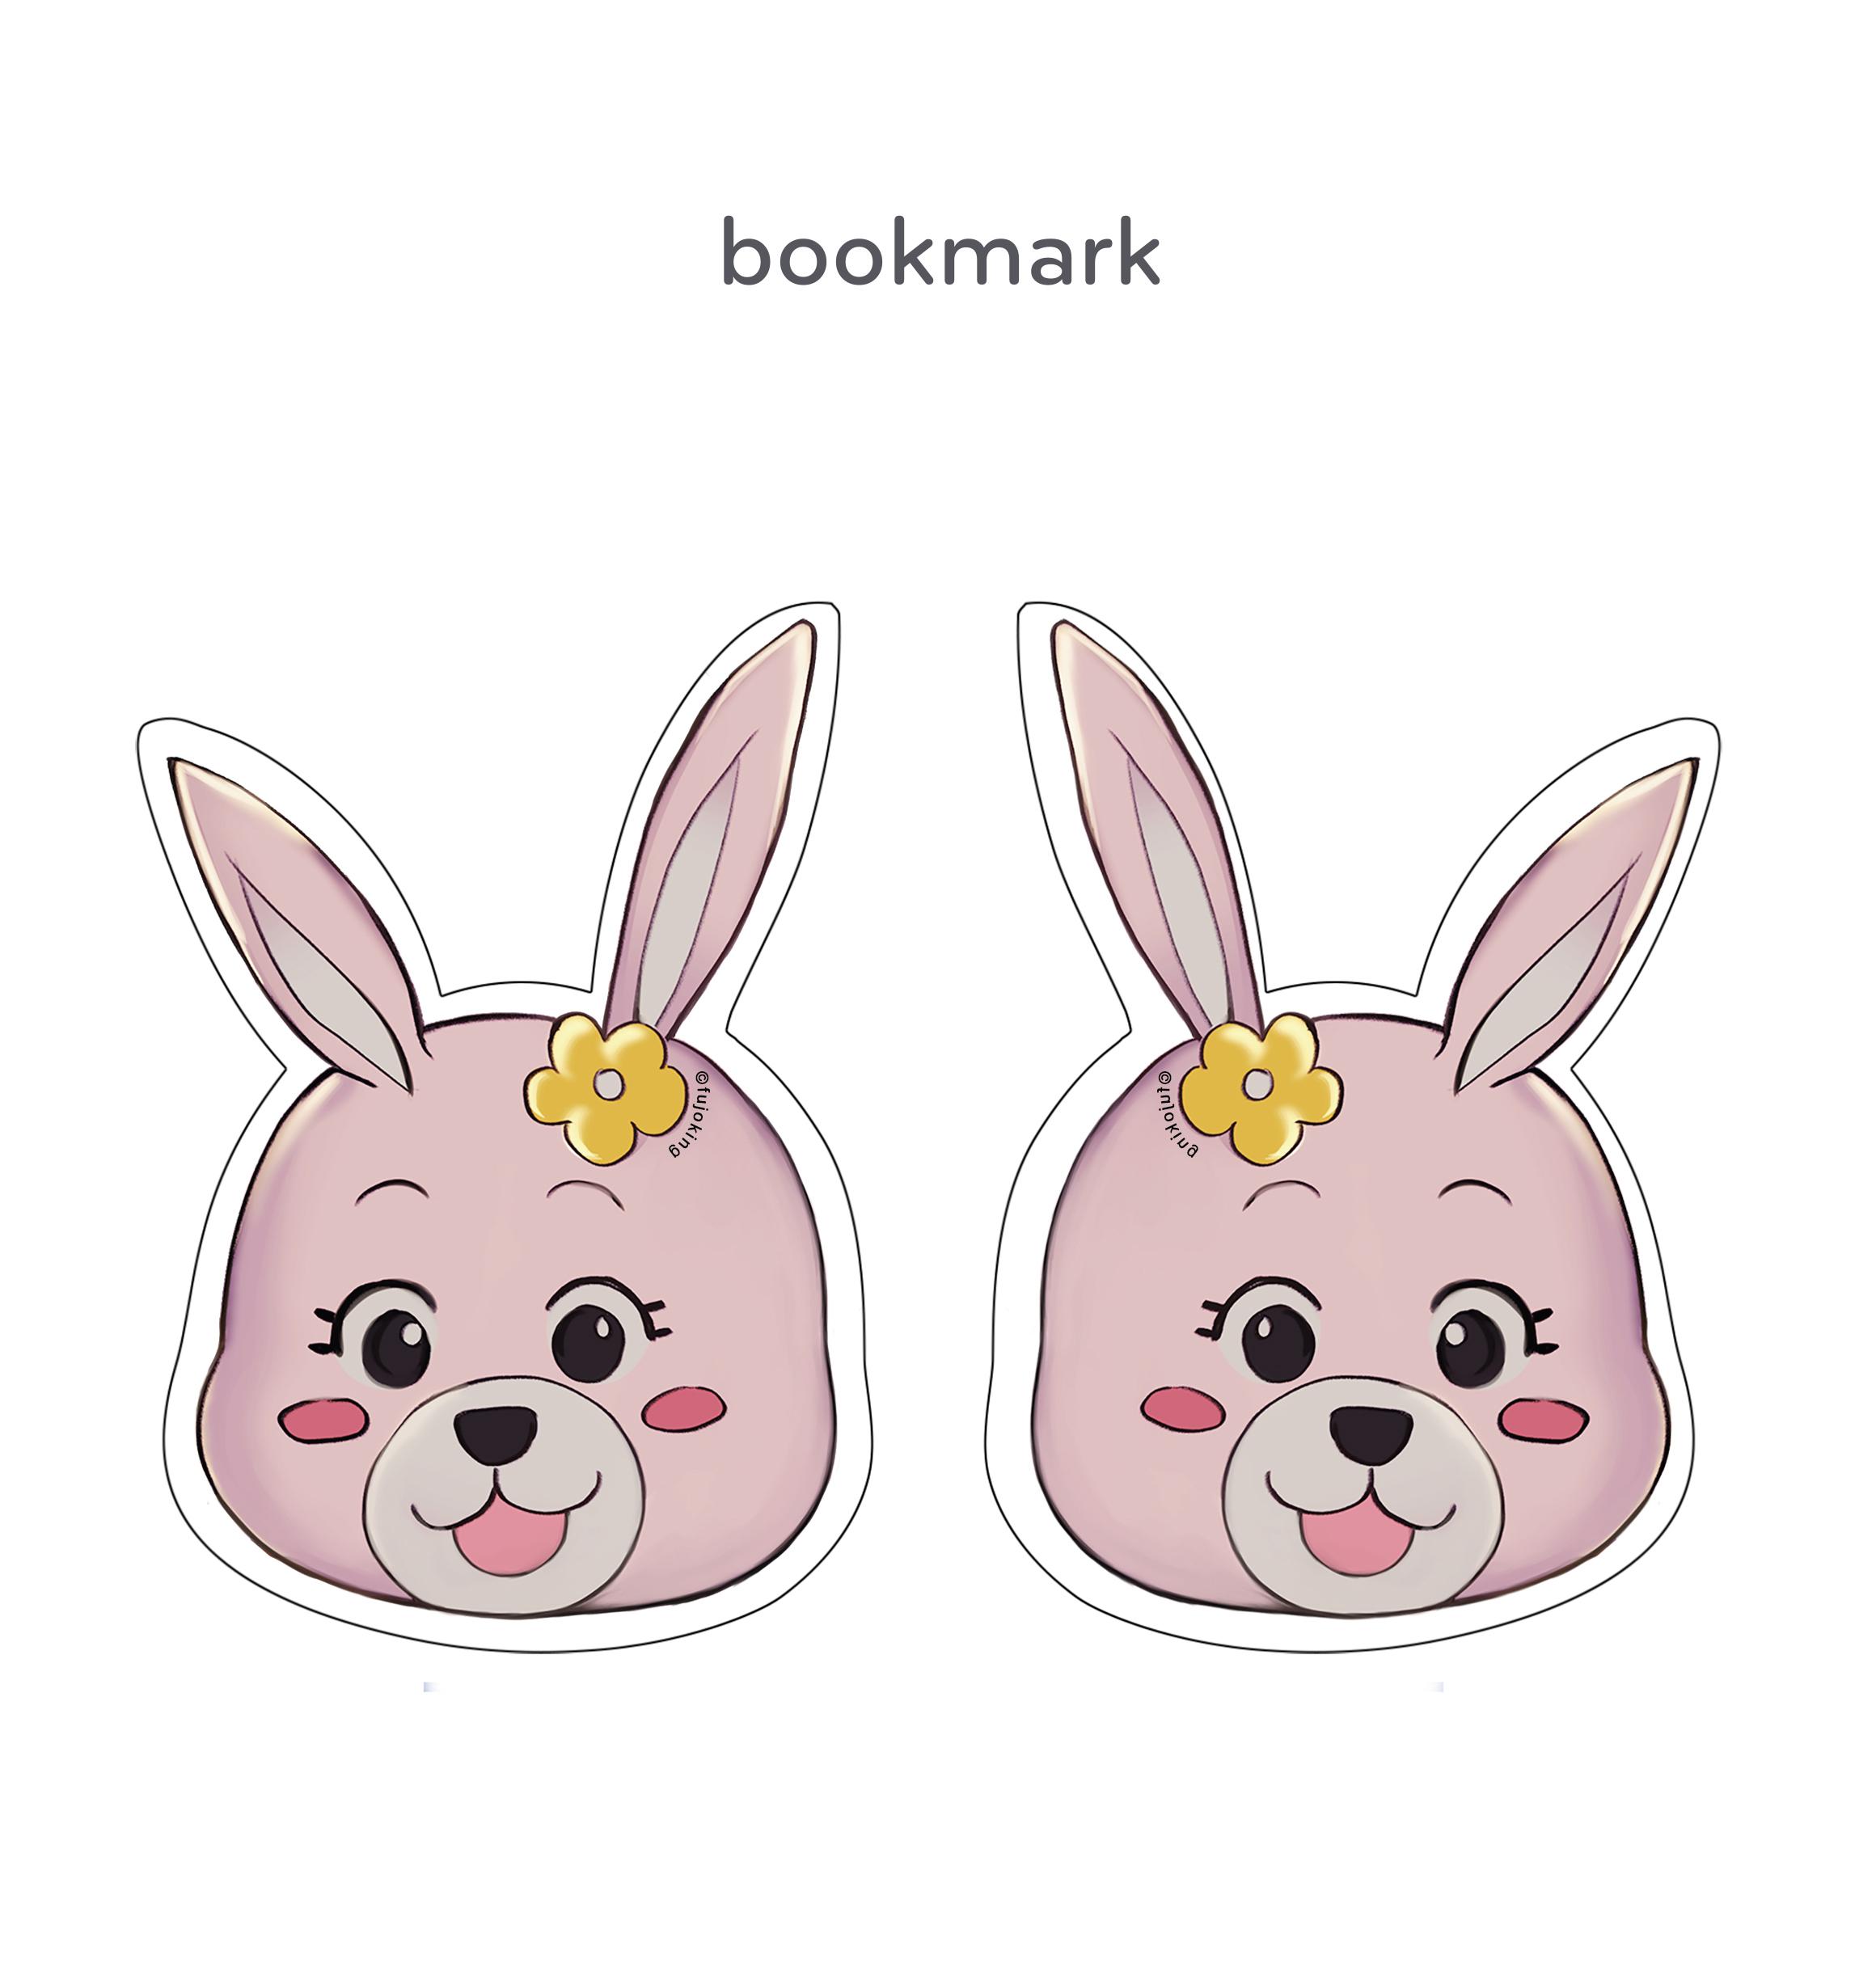 Payback - Tập 2 - Tặng Kèm Bookmark Thỏ + Postcard